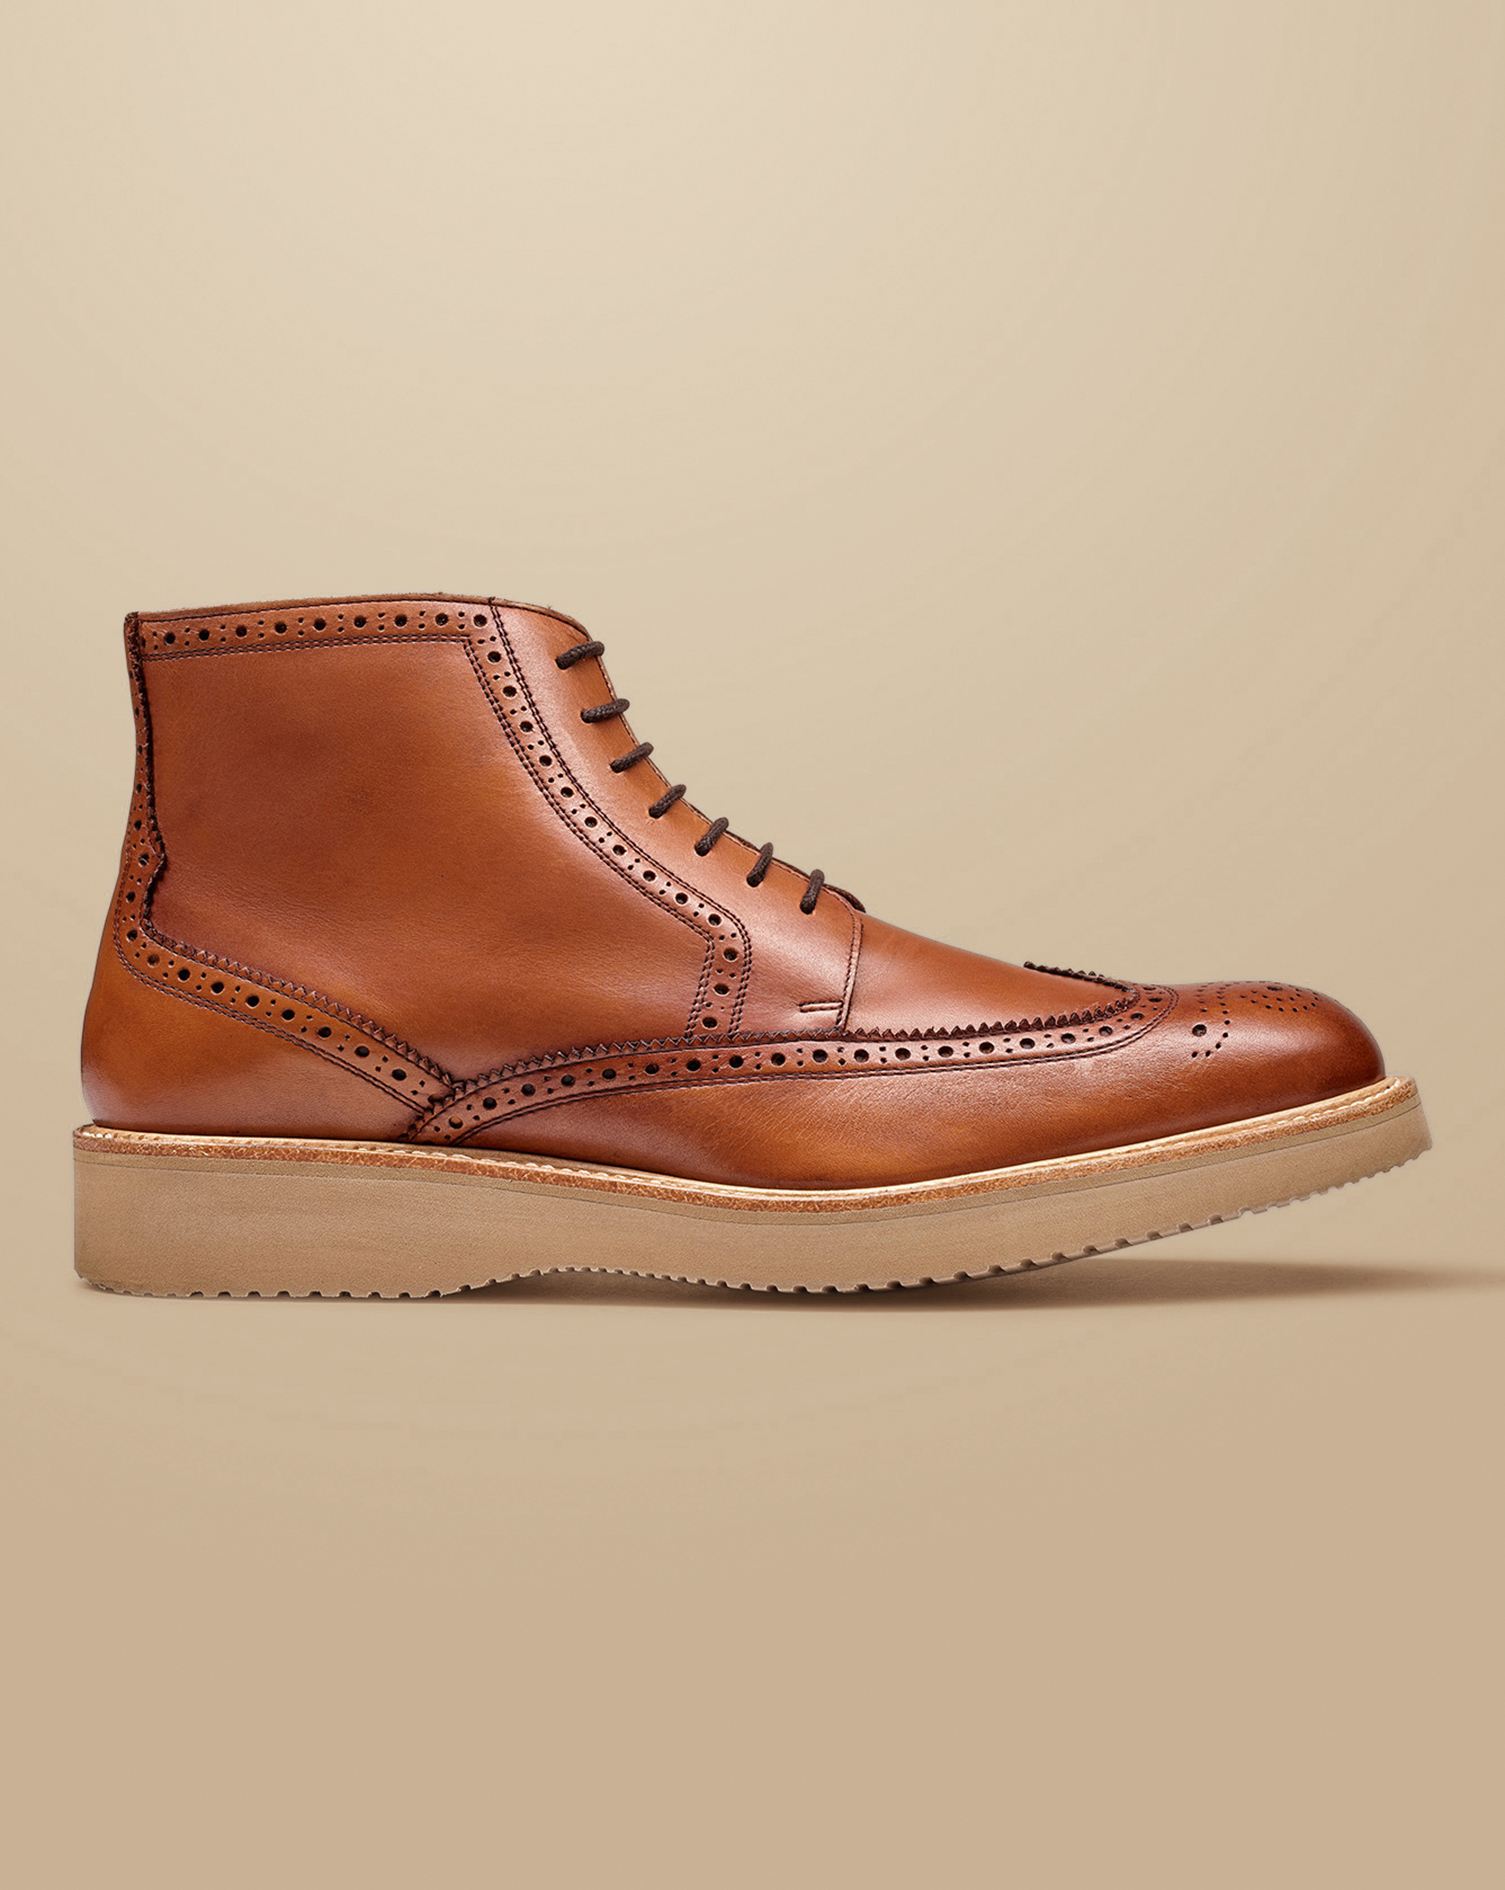 Men's Charles Tyrwhitt Brogue Boots - Dark Tan Brown Size 8 Leather
